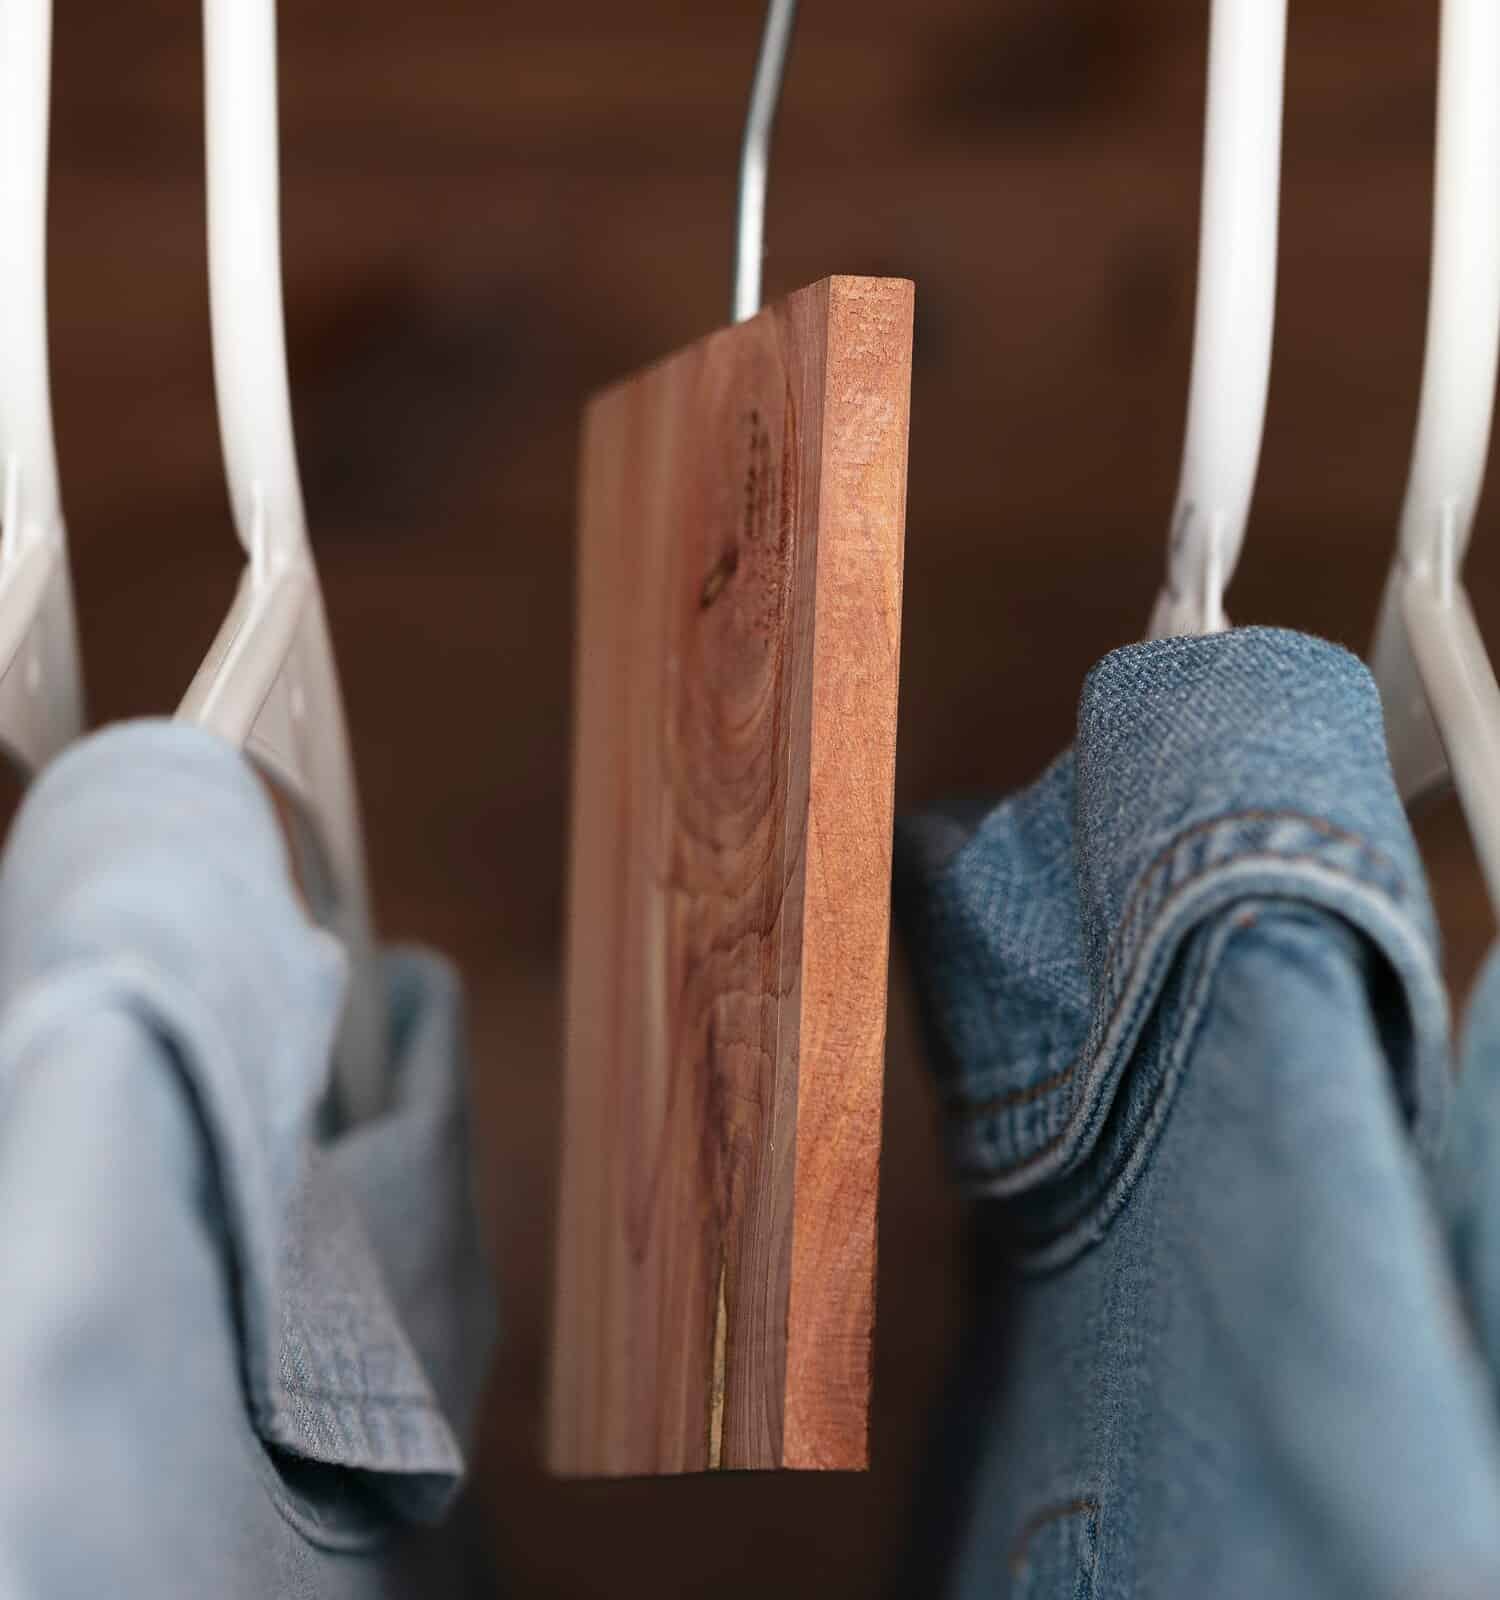 Aromatic cedar block hanging in a closet.